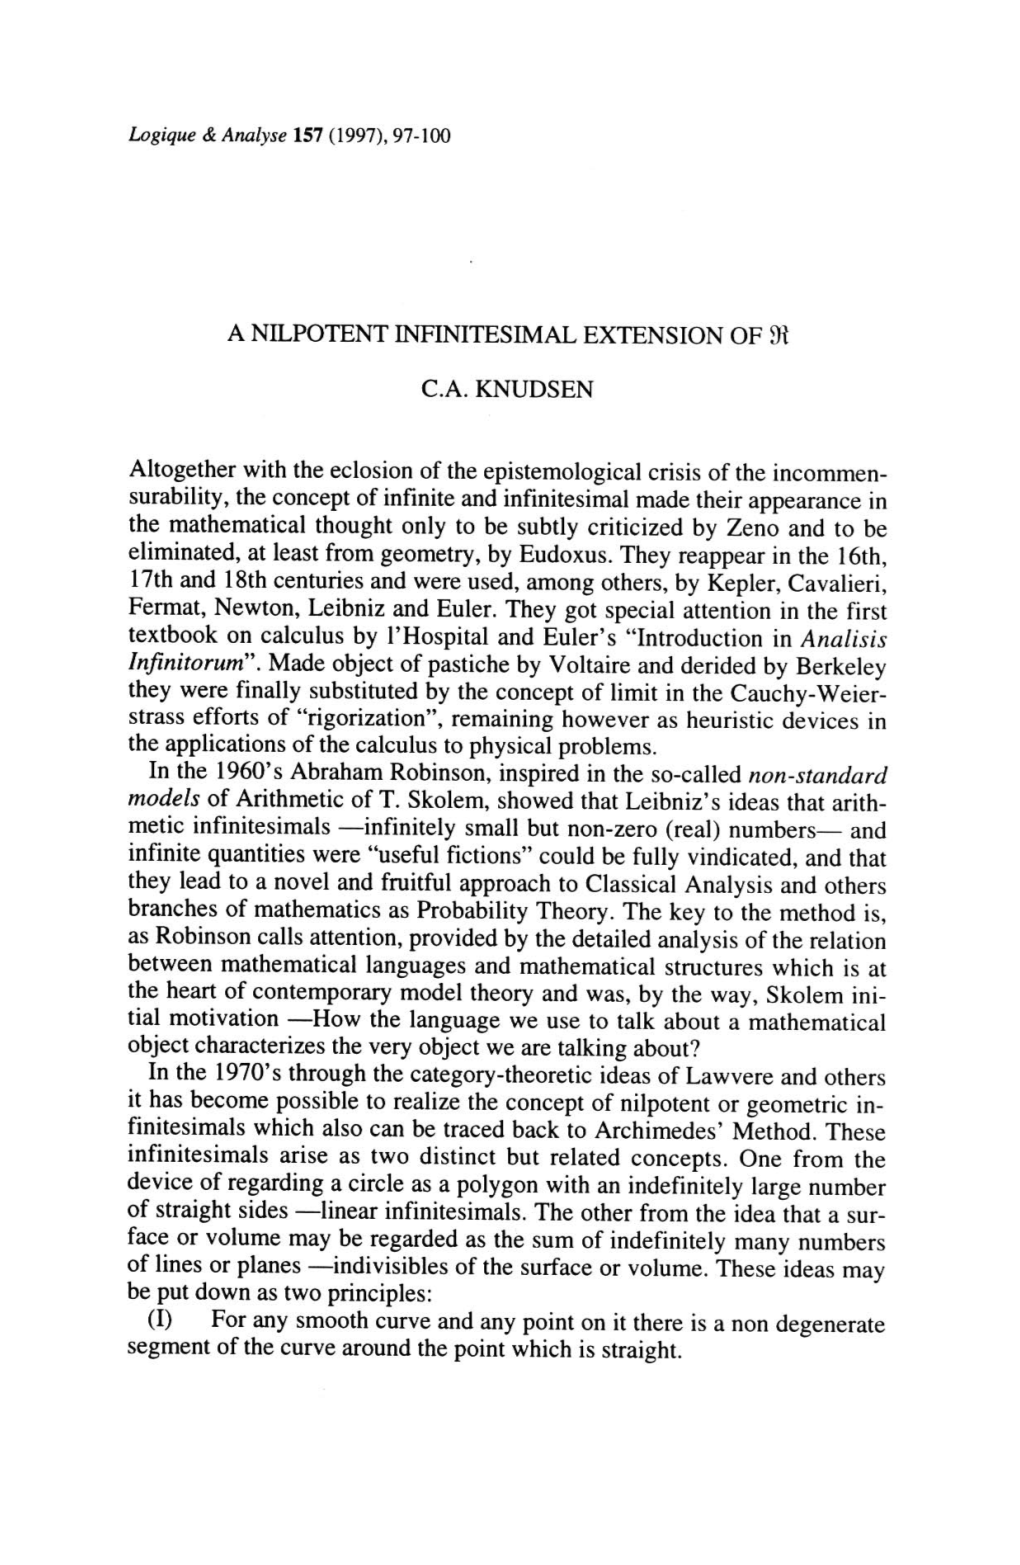 A Nilpotent Infinitesimal Extension of 91 C.A. Knudsen